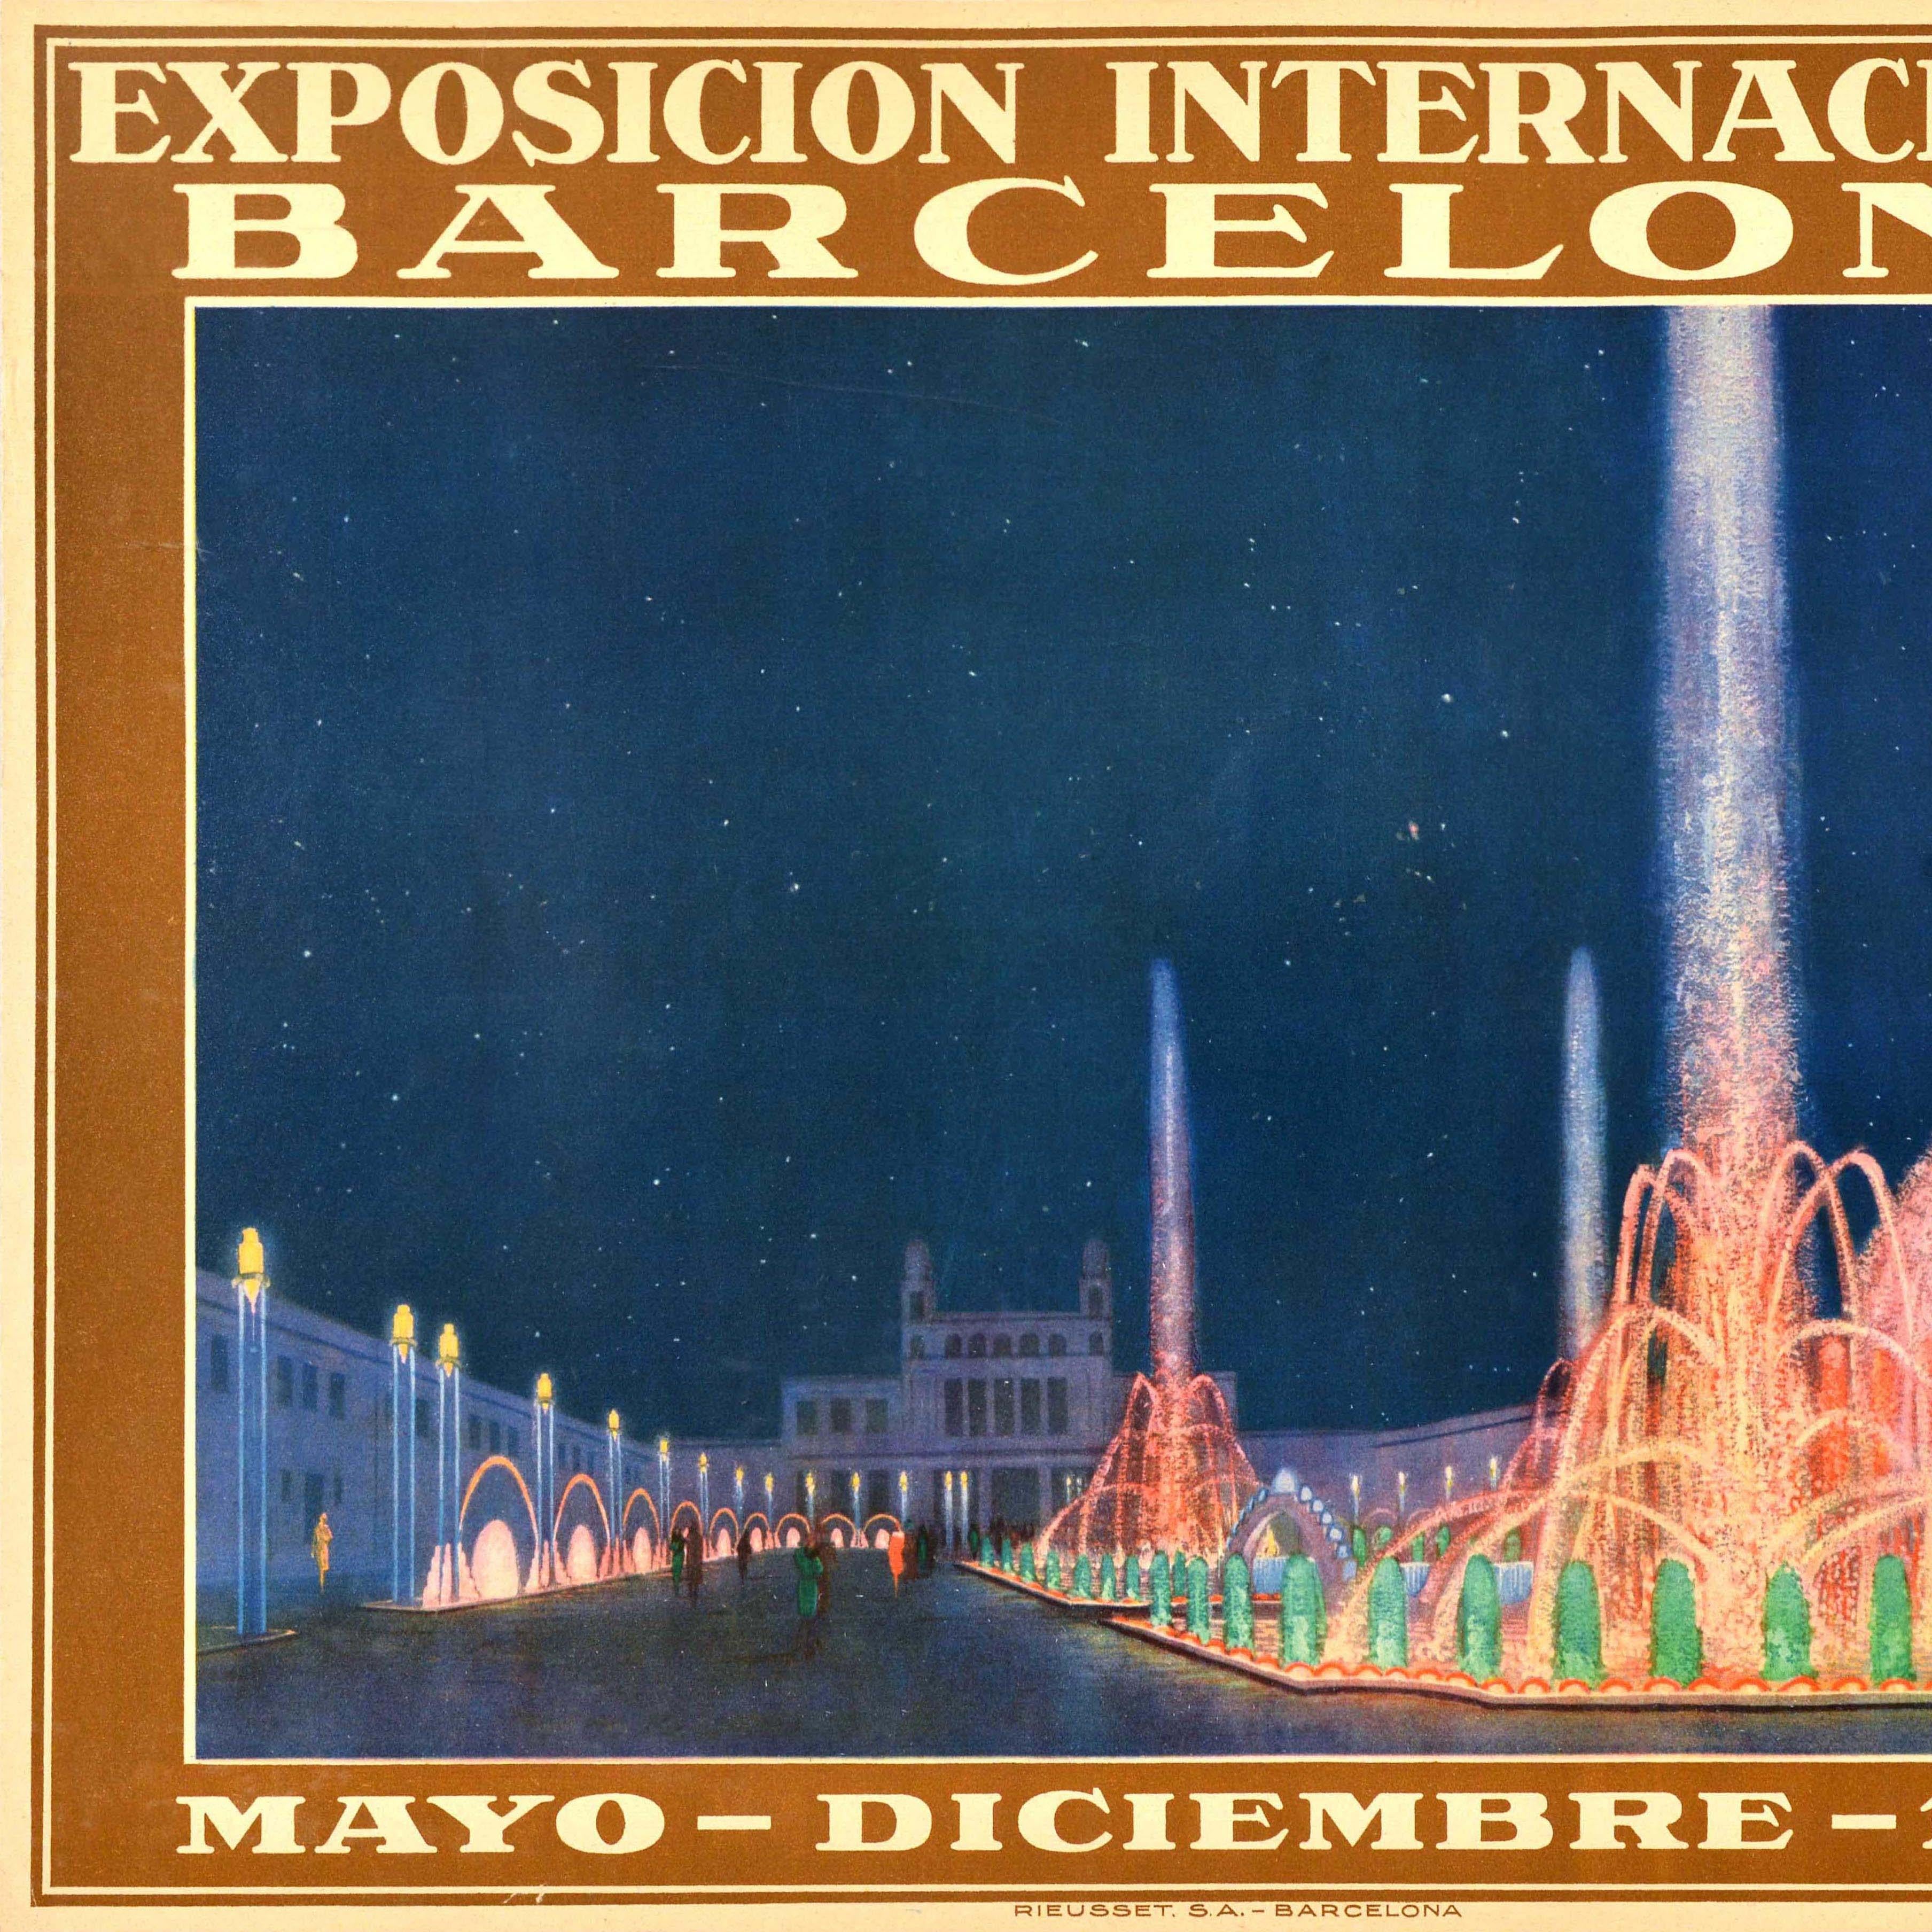 Spanish Original Vintage Advertising Poster Barcelona International Exposition 1929 Fair For Sale